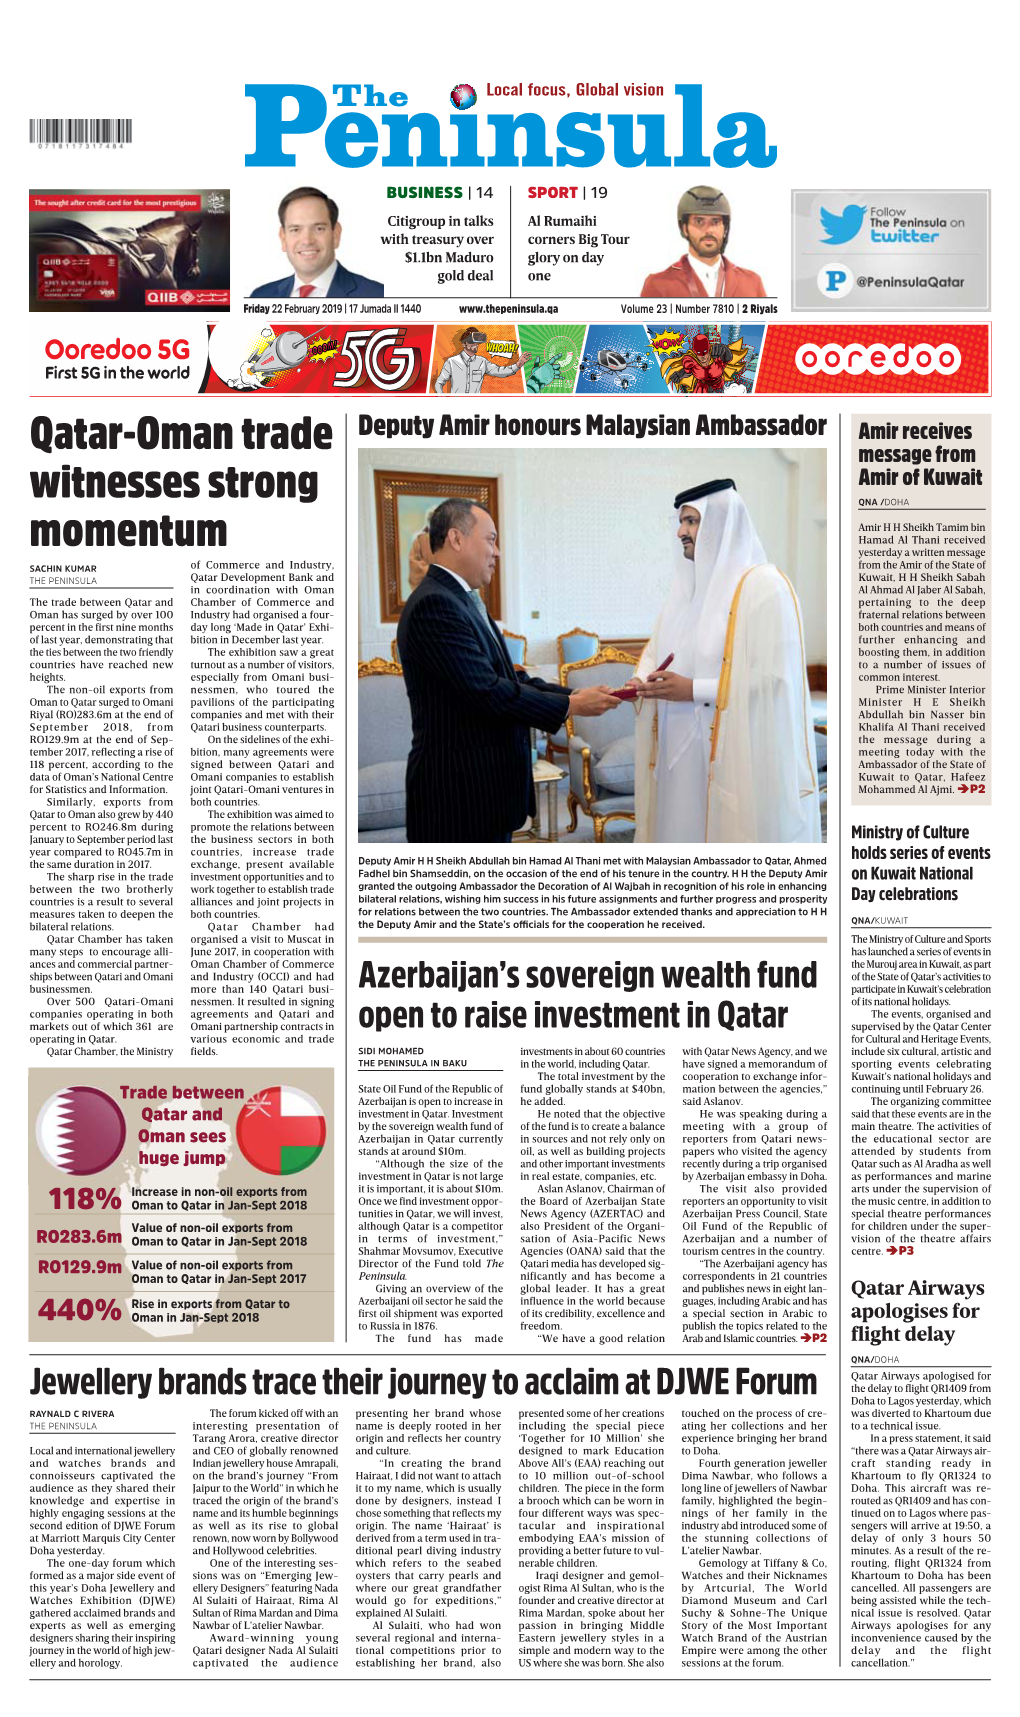 Qatar-Oman Trade Witnesses Strong Momentum